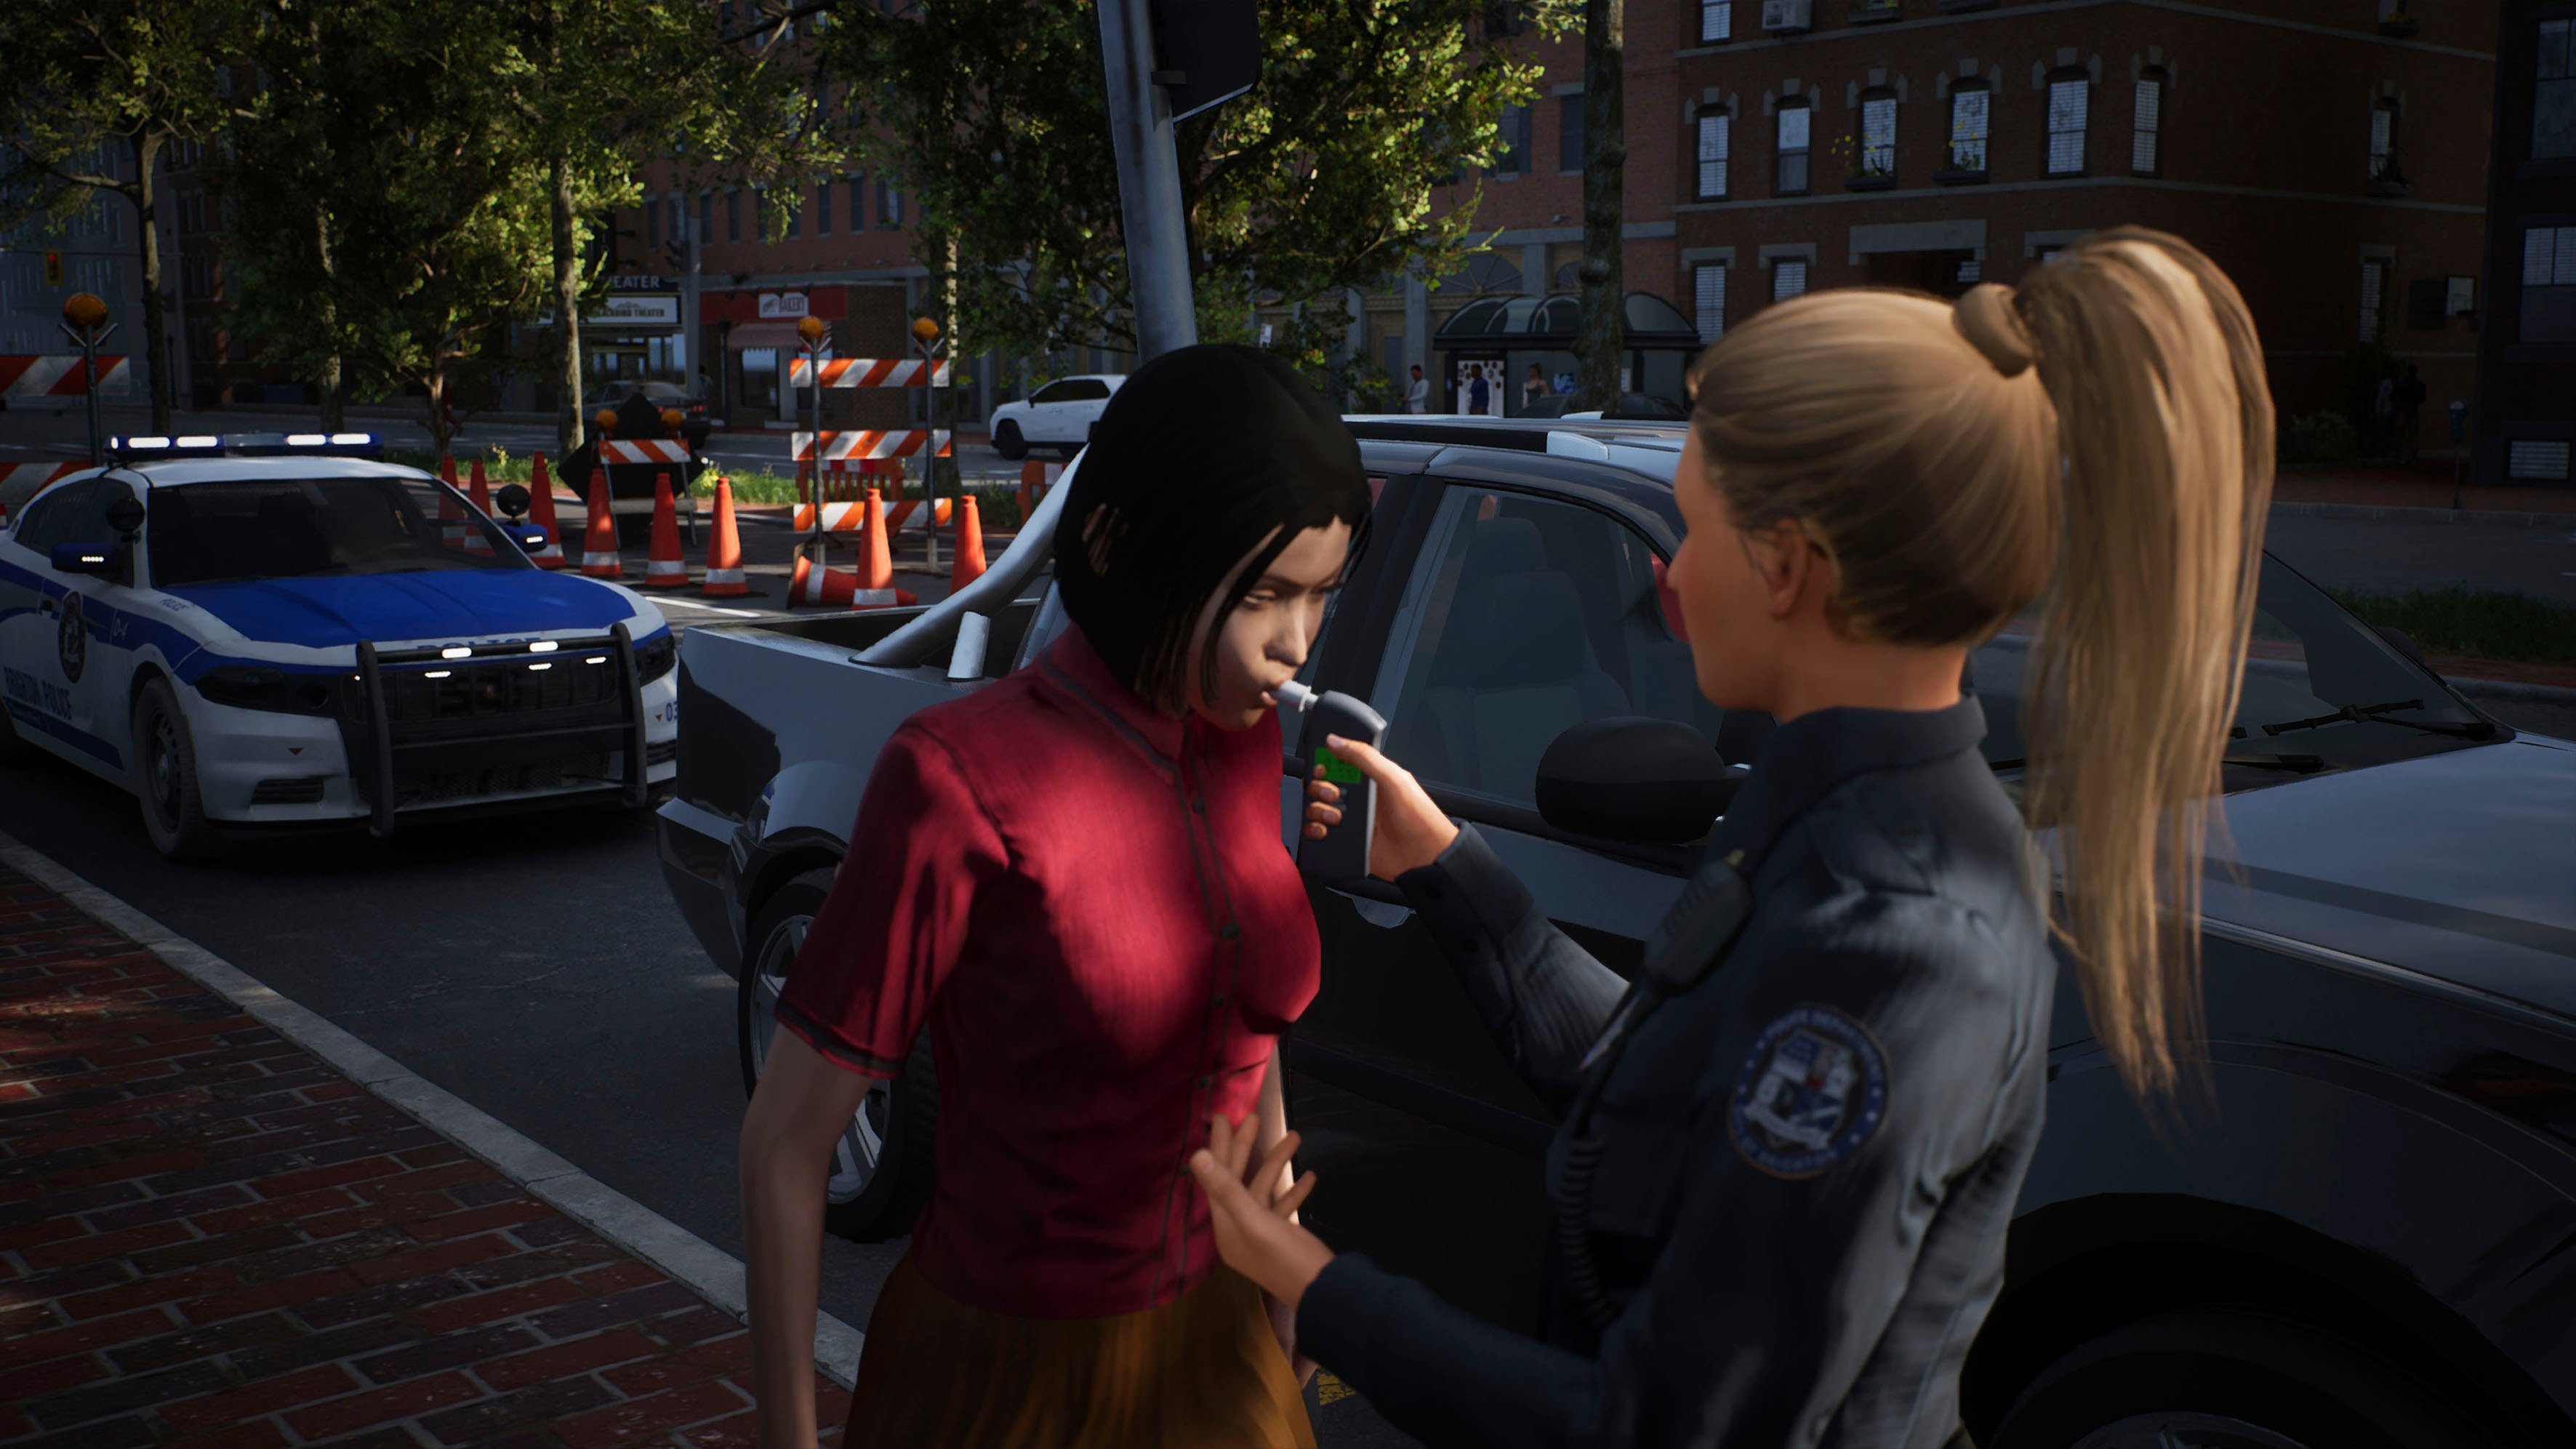 Astragon Police Simulator: Patrol Officers PlayStation 5